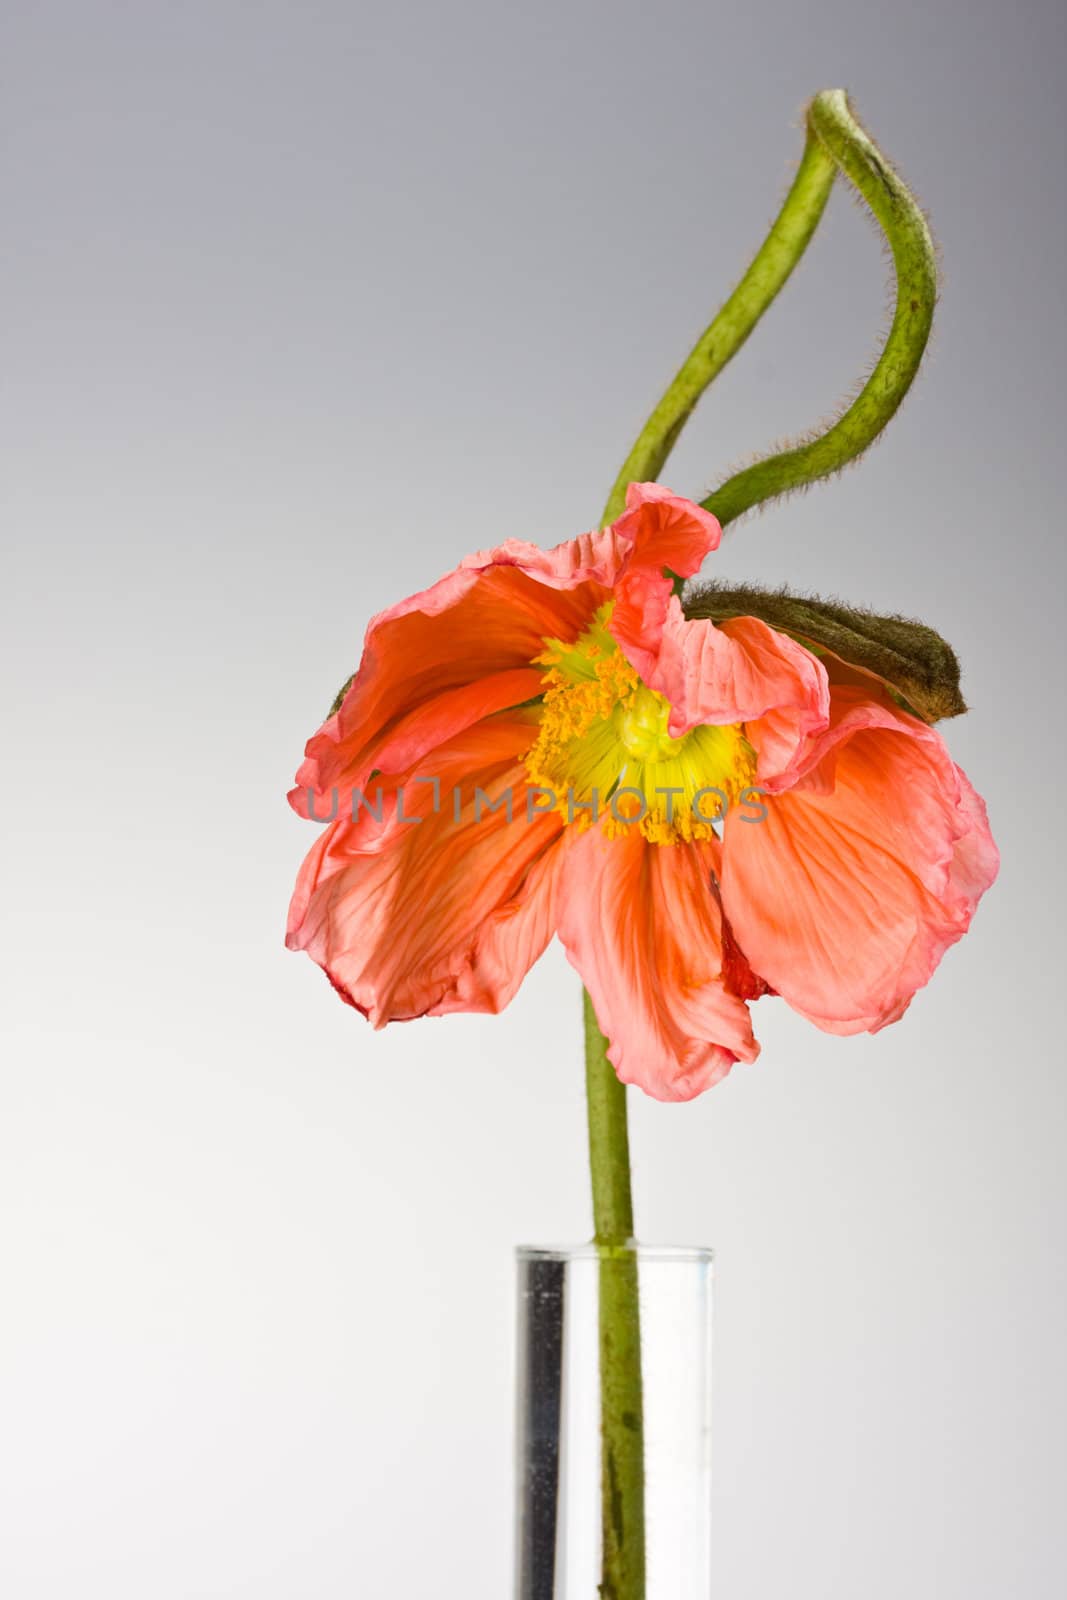 single poppy seed in a glass vase